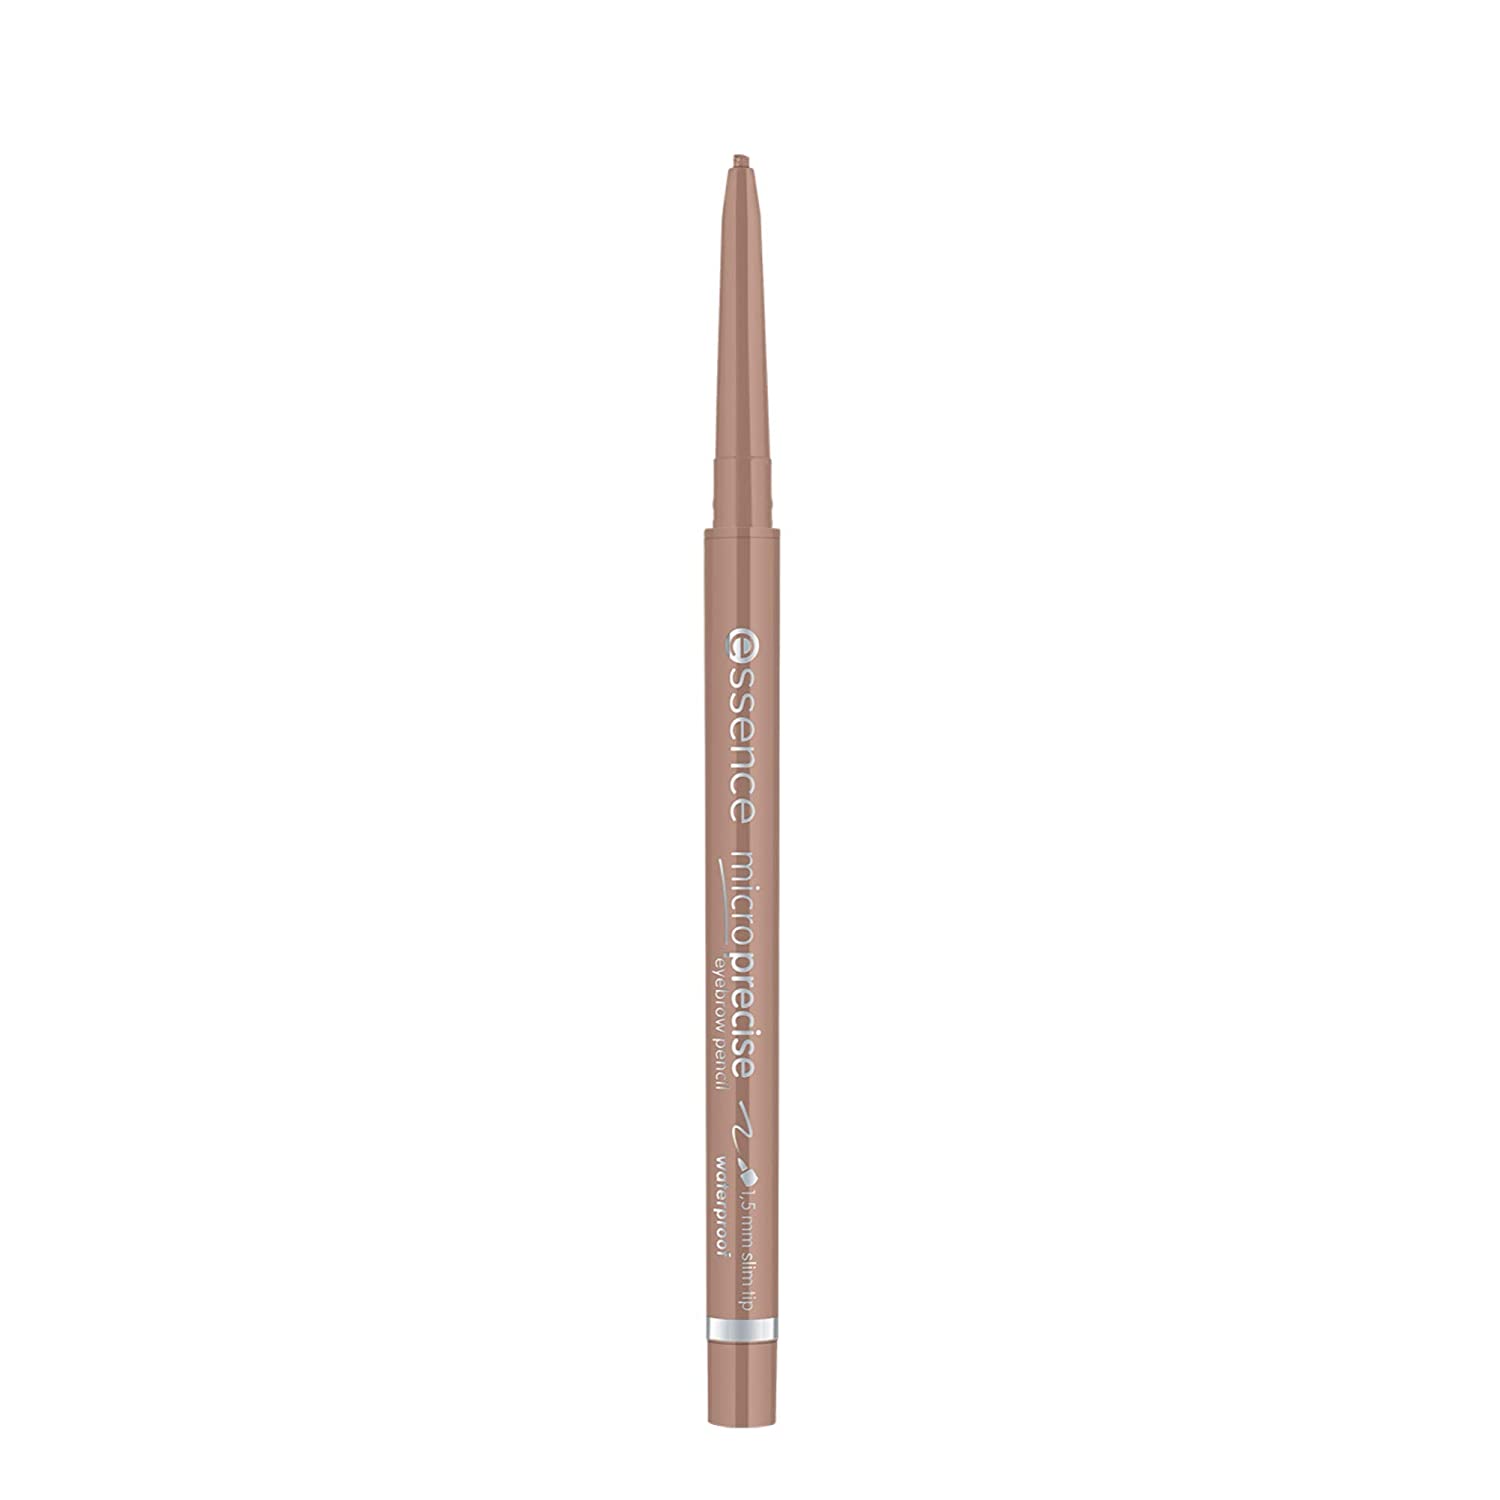 essence cosmetics essence Micro precise eyebrow pencil, no. 01 blonde, brown, defining, long-lasting, natural, vegan, waterproof, microplastic particles free (0.05 g)